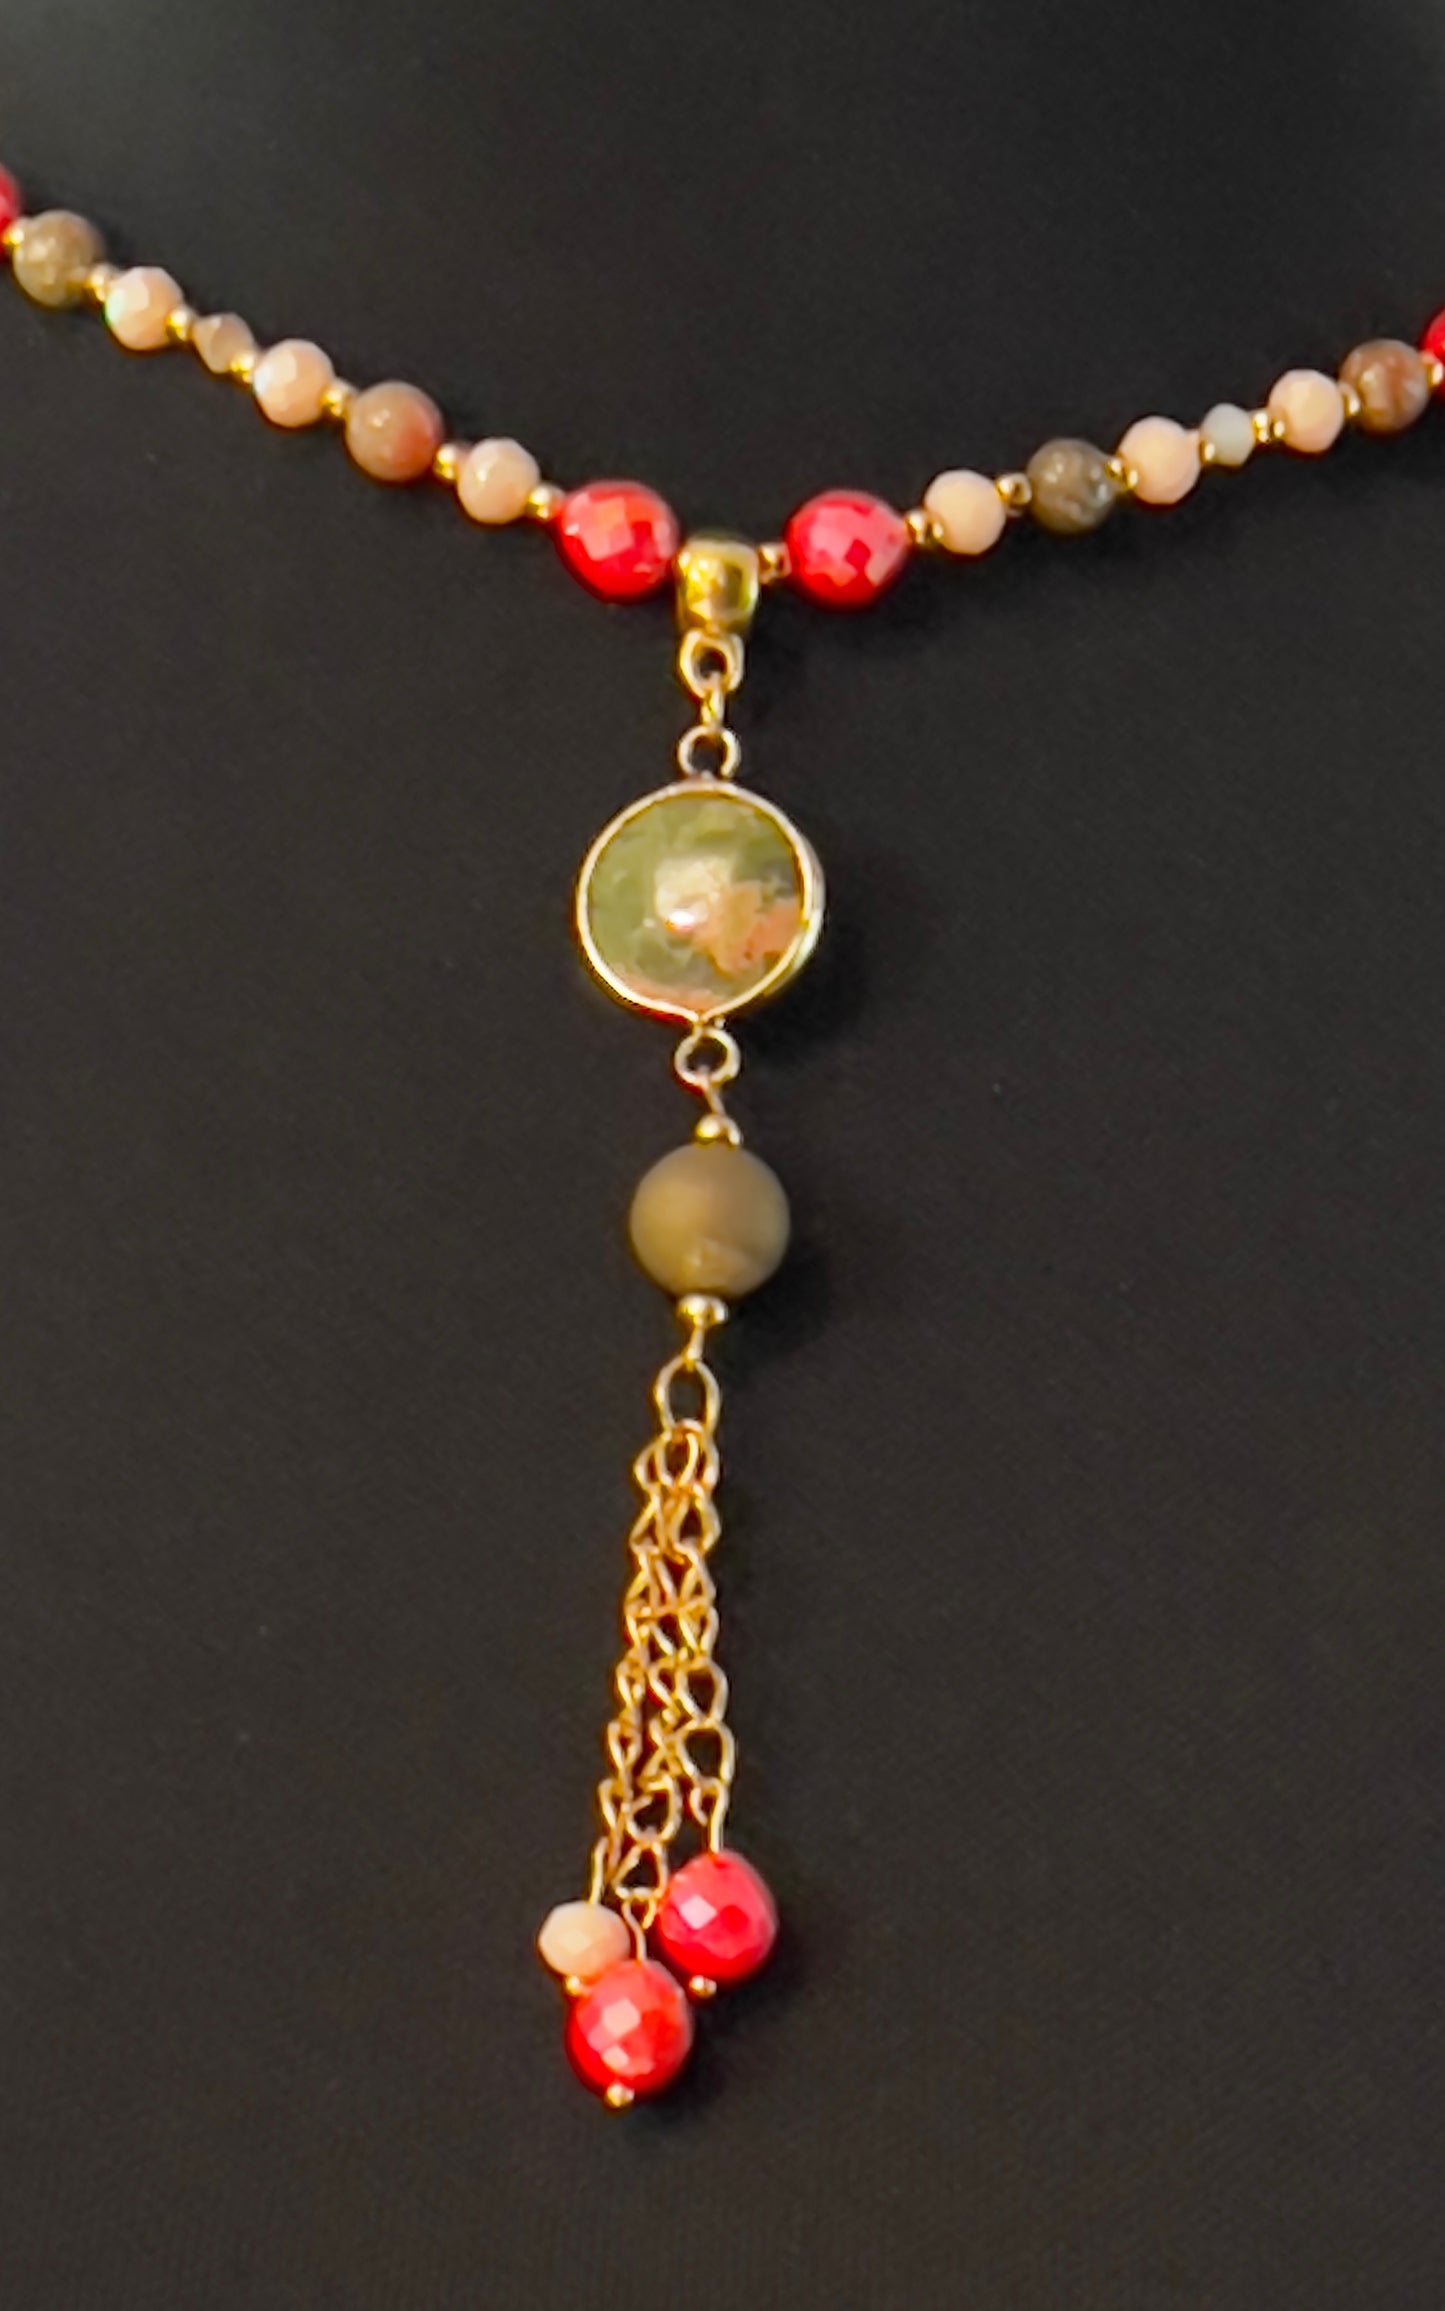 Stunning Handmade Necklace of Austrian Crystal, Jasper and Ukanite